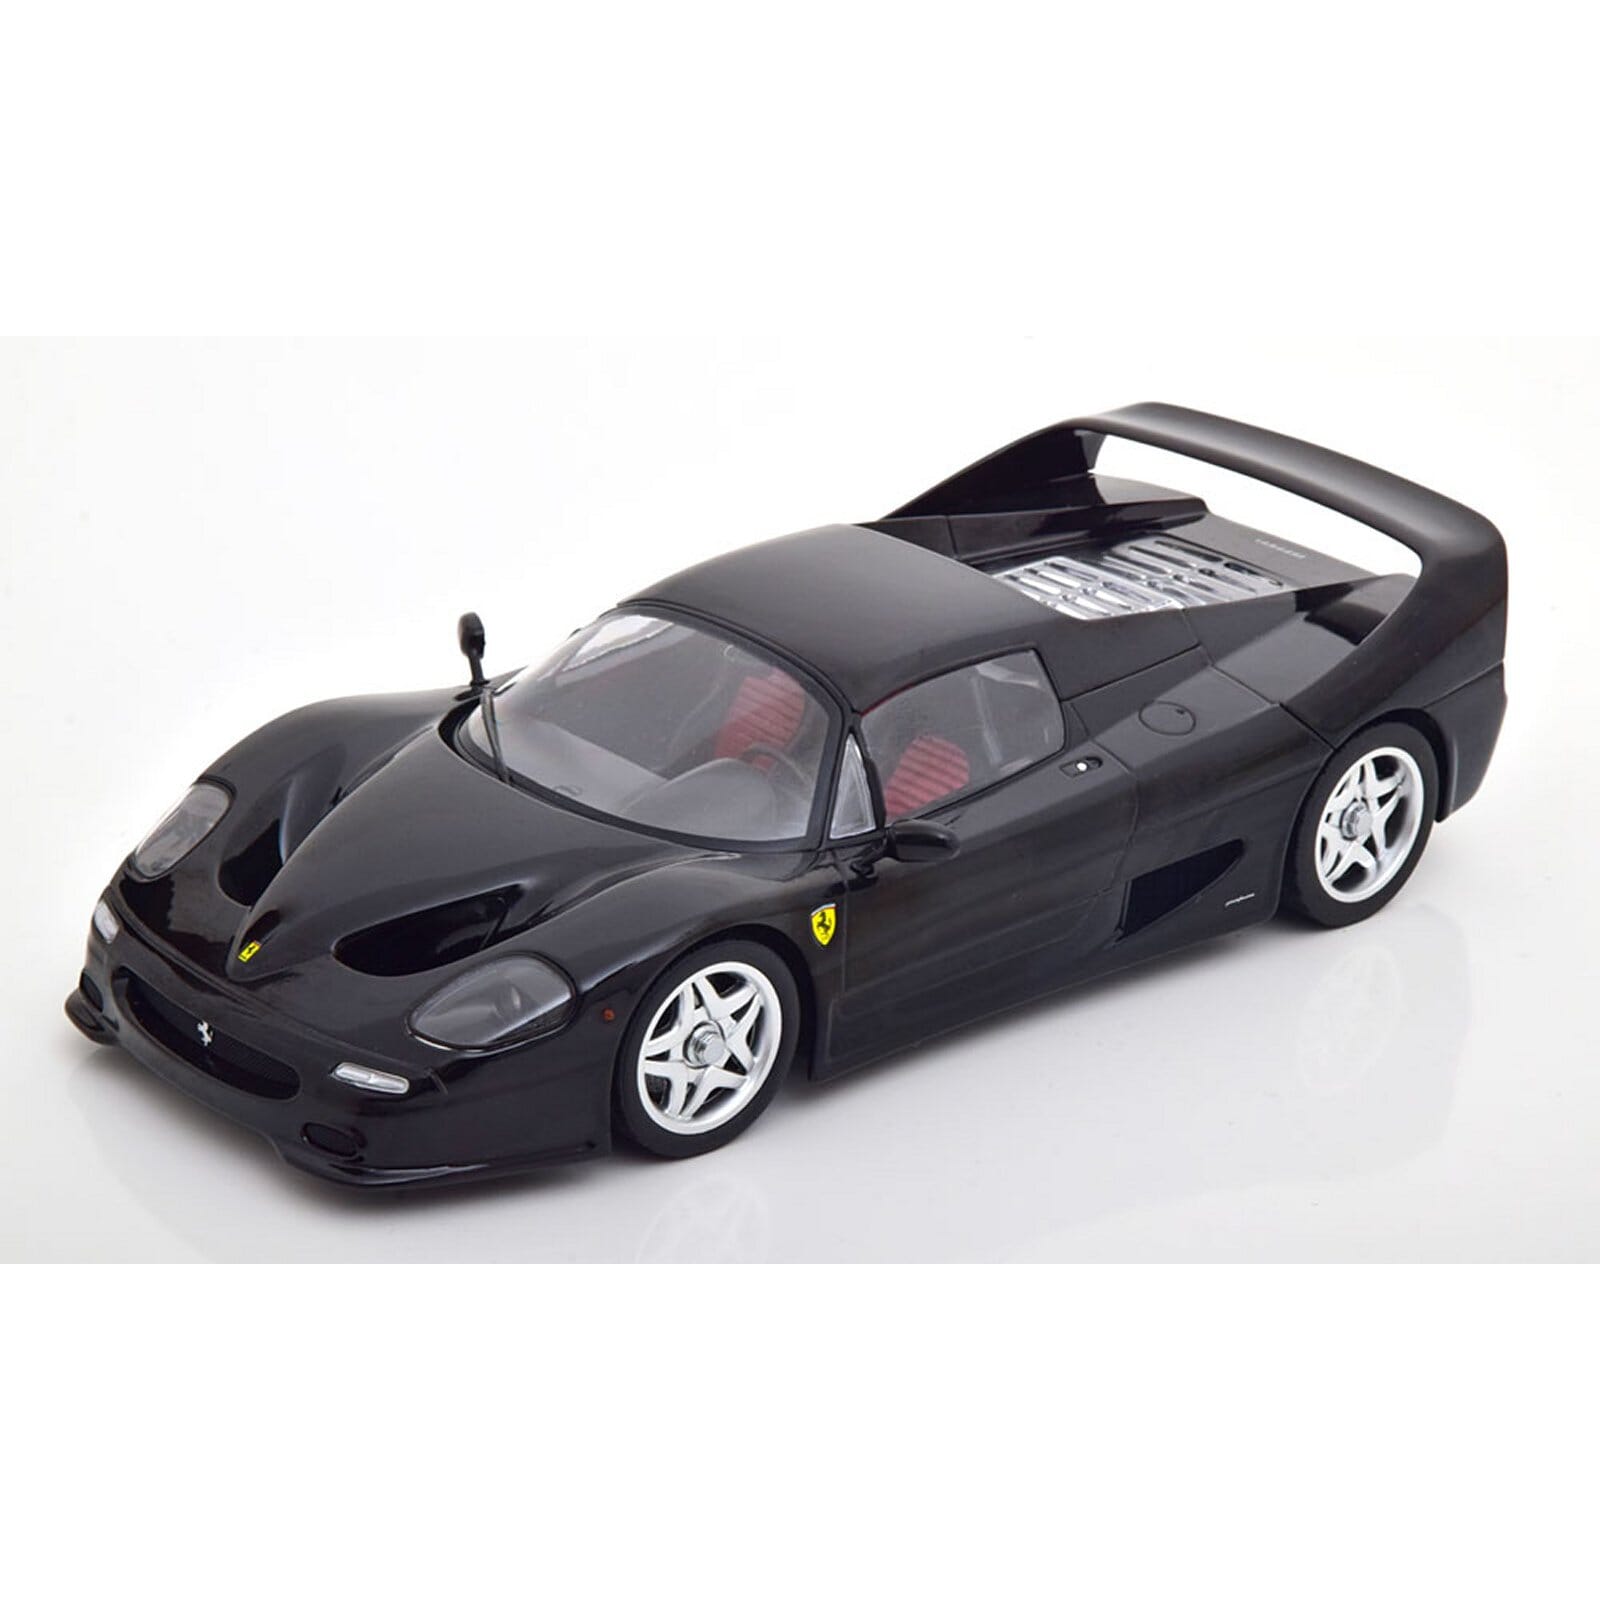 Ferrari F50 Hard Top Diecast Model 1:18 scale Black